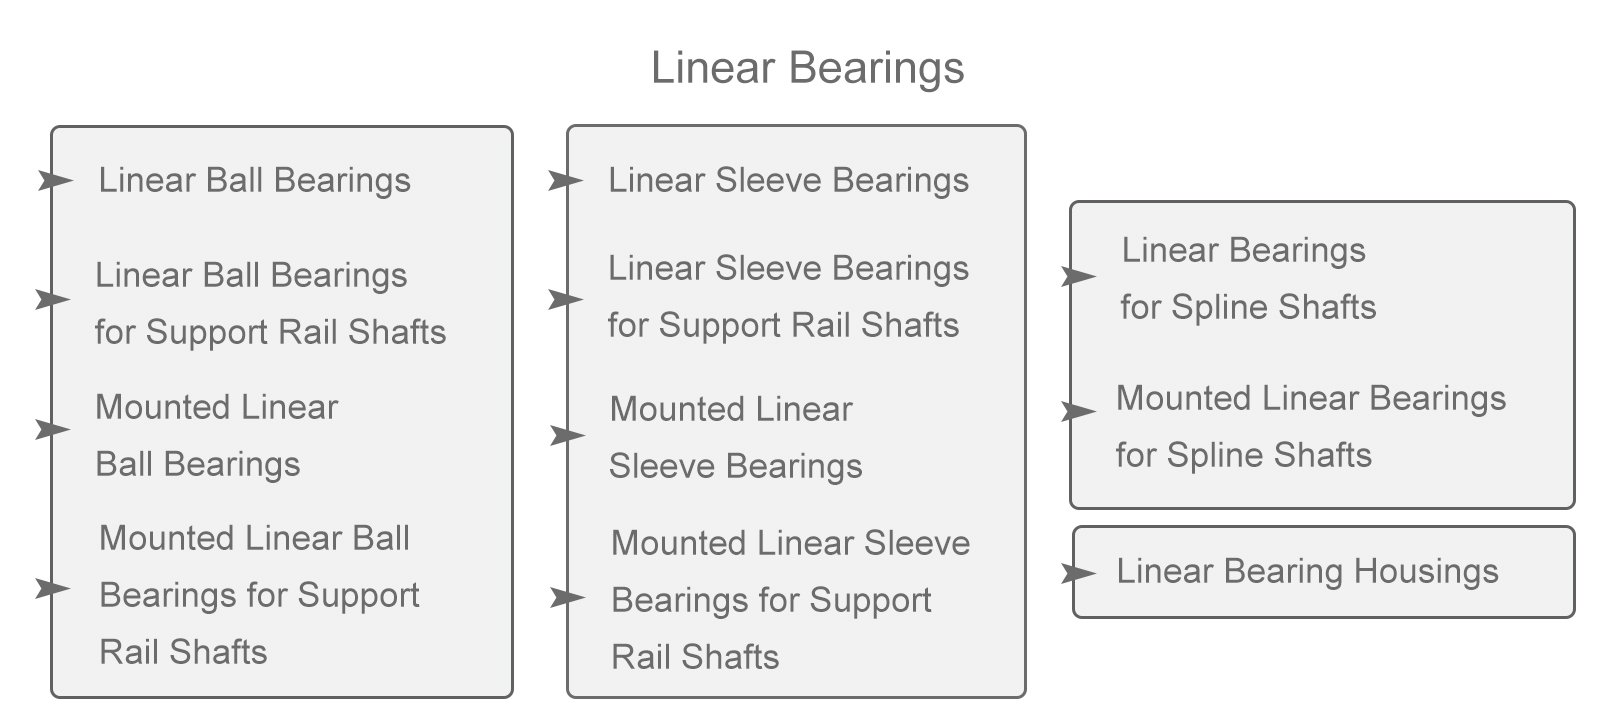 Types of Linear Bearings